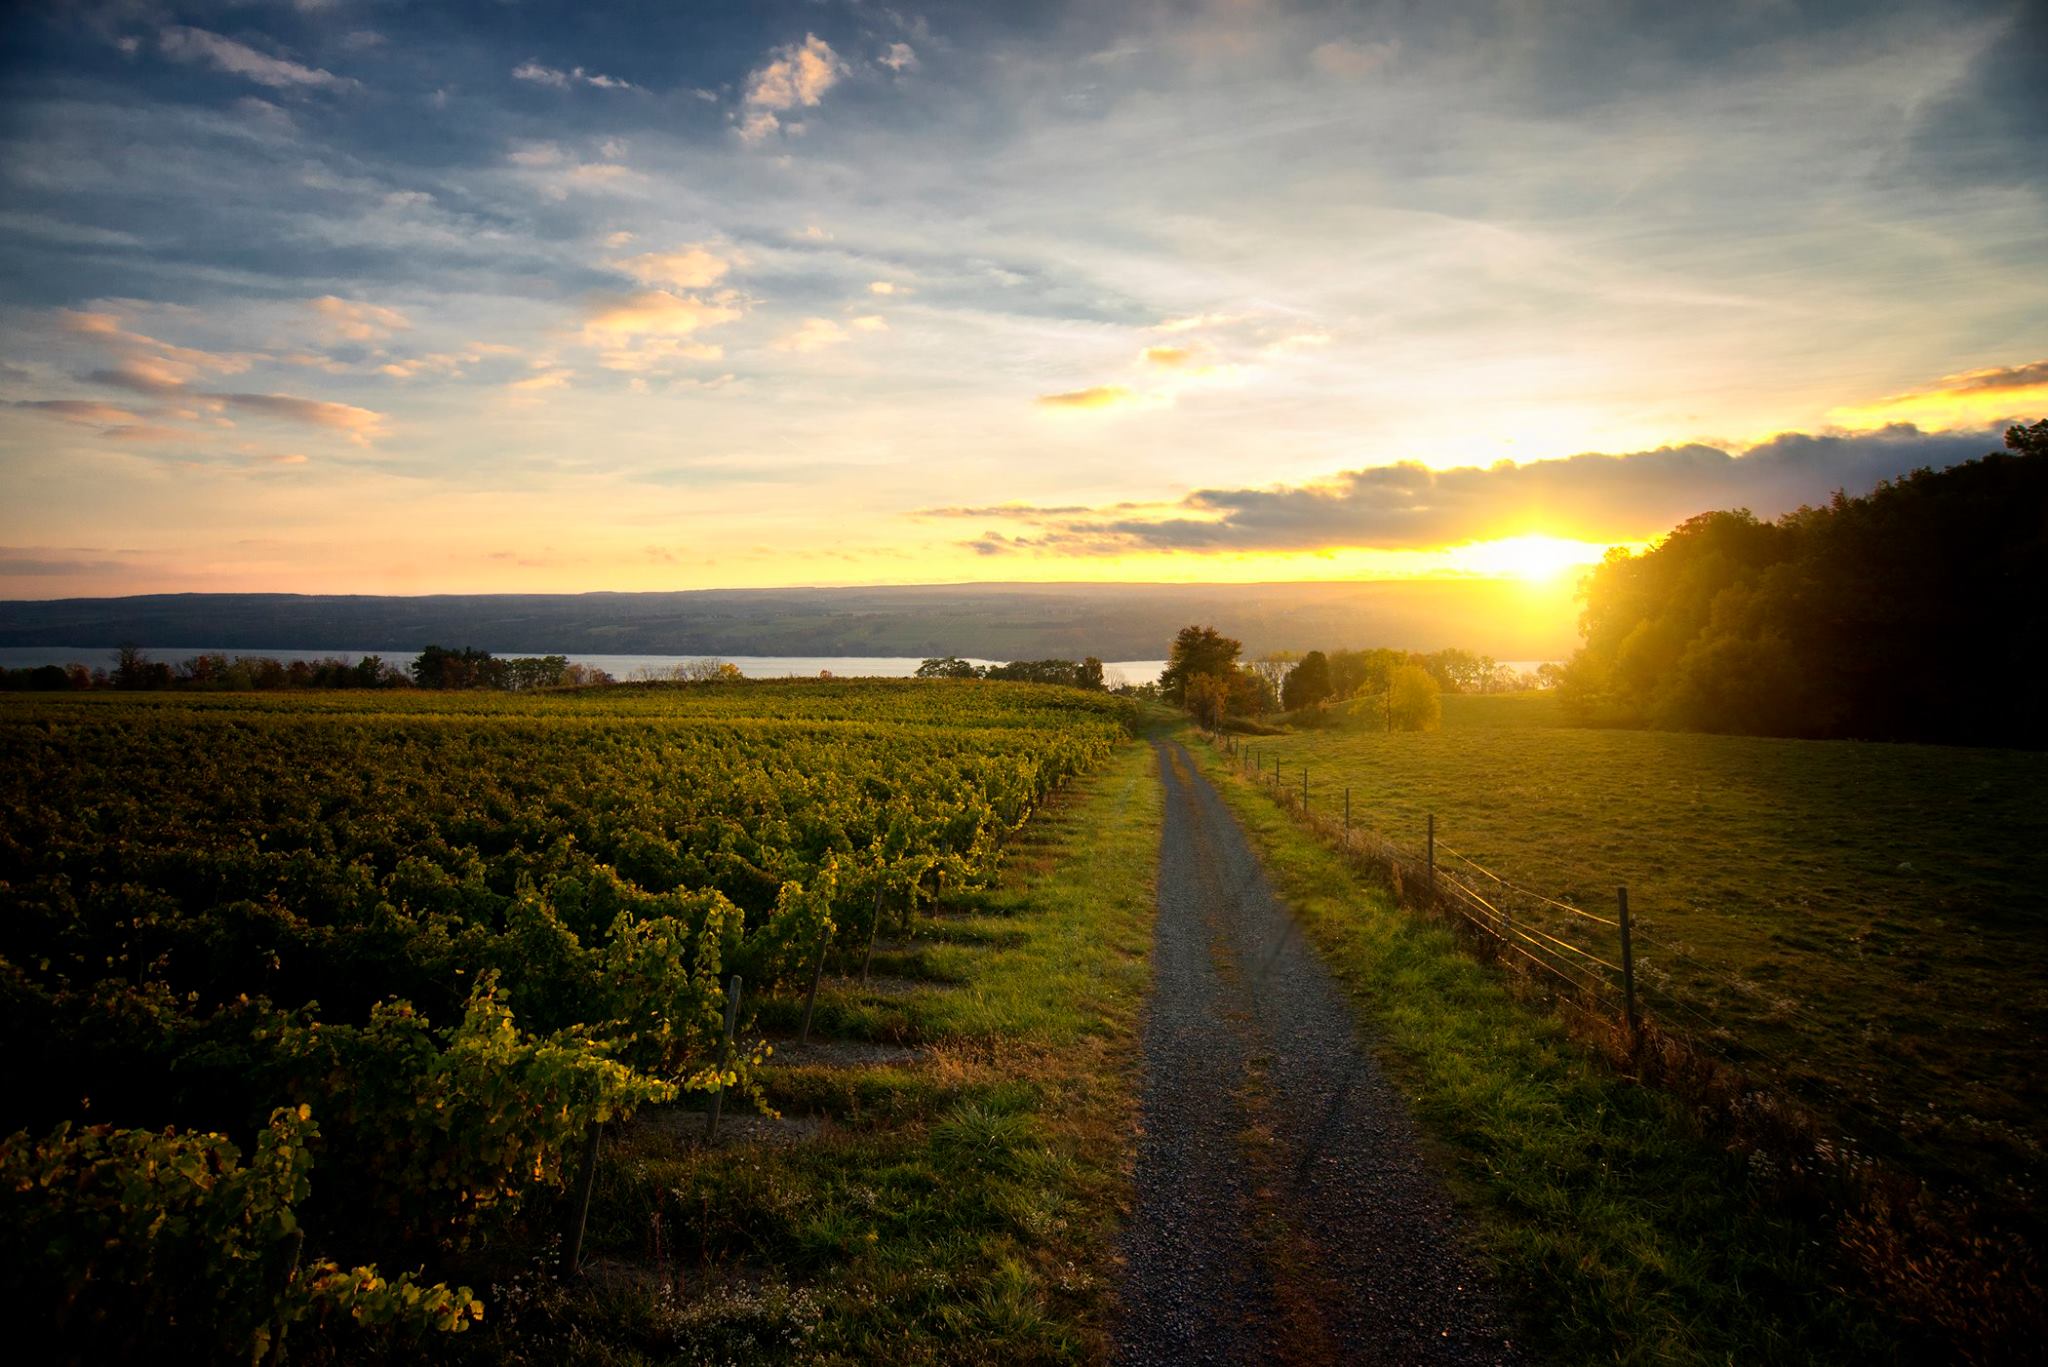 Cortland Apples - Fulkerson Winery - Finger Lakes Winery - Seneca